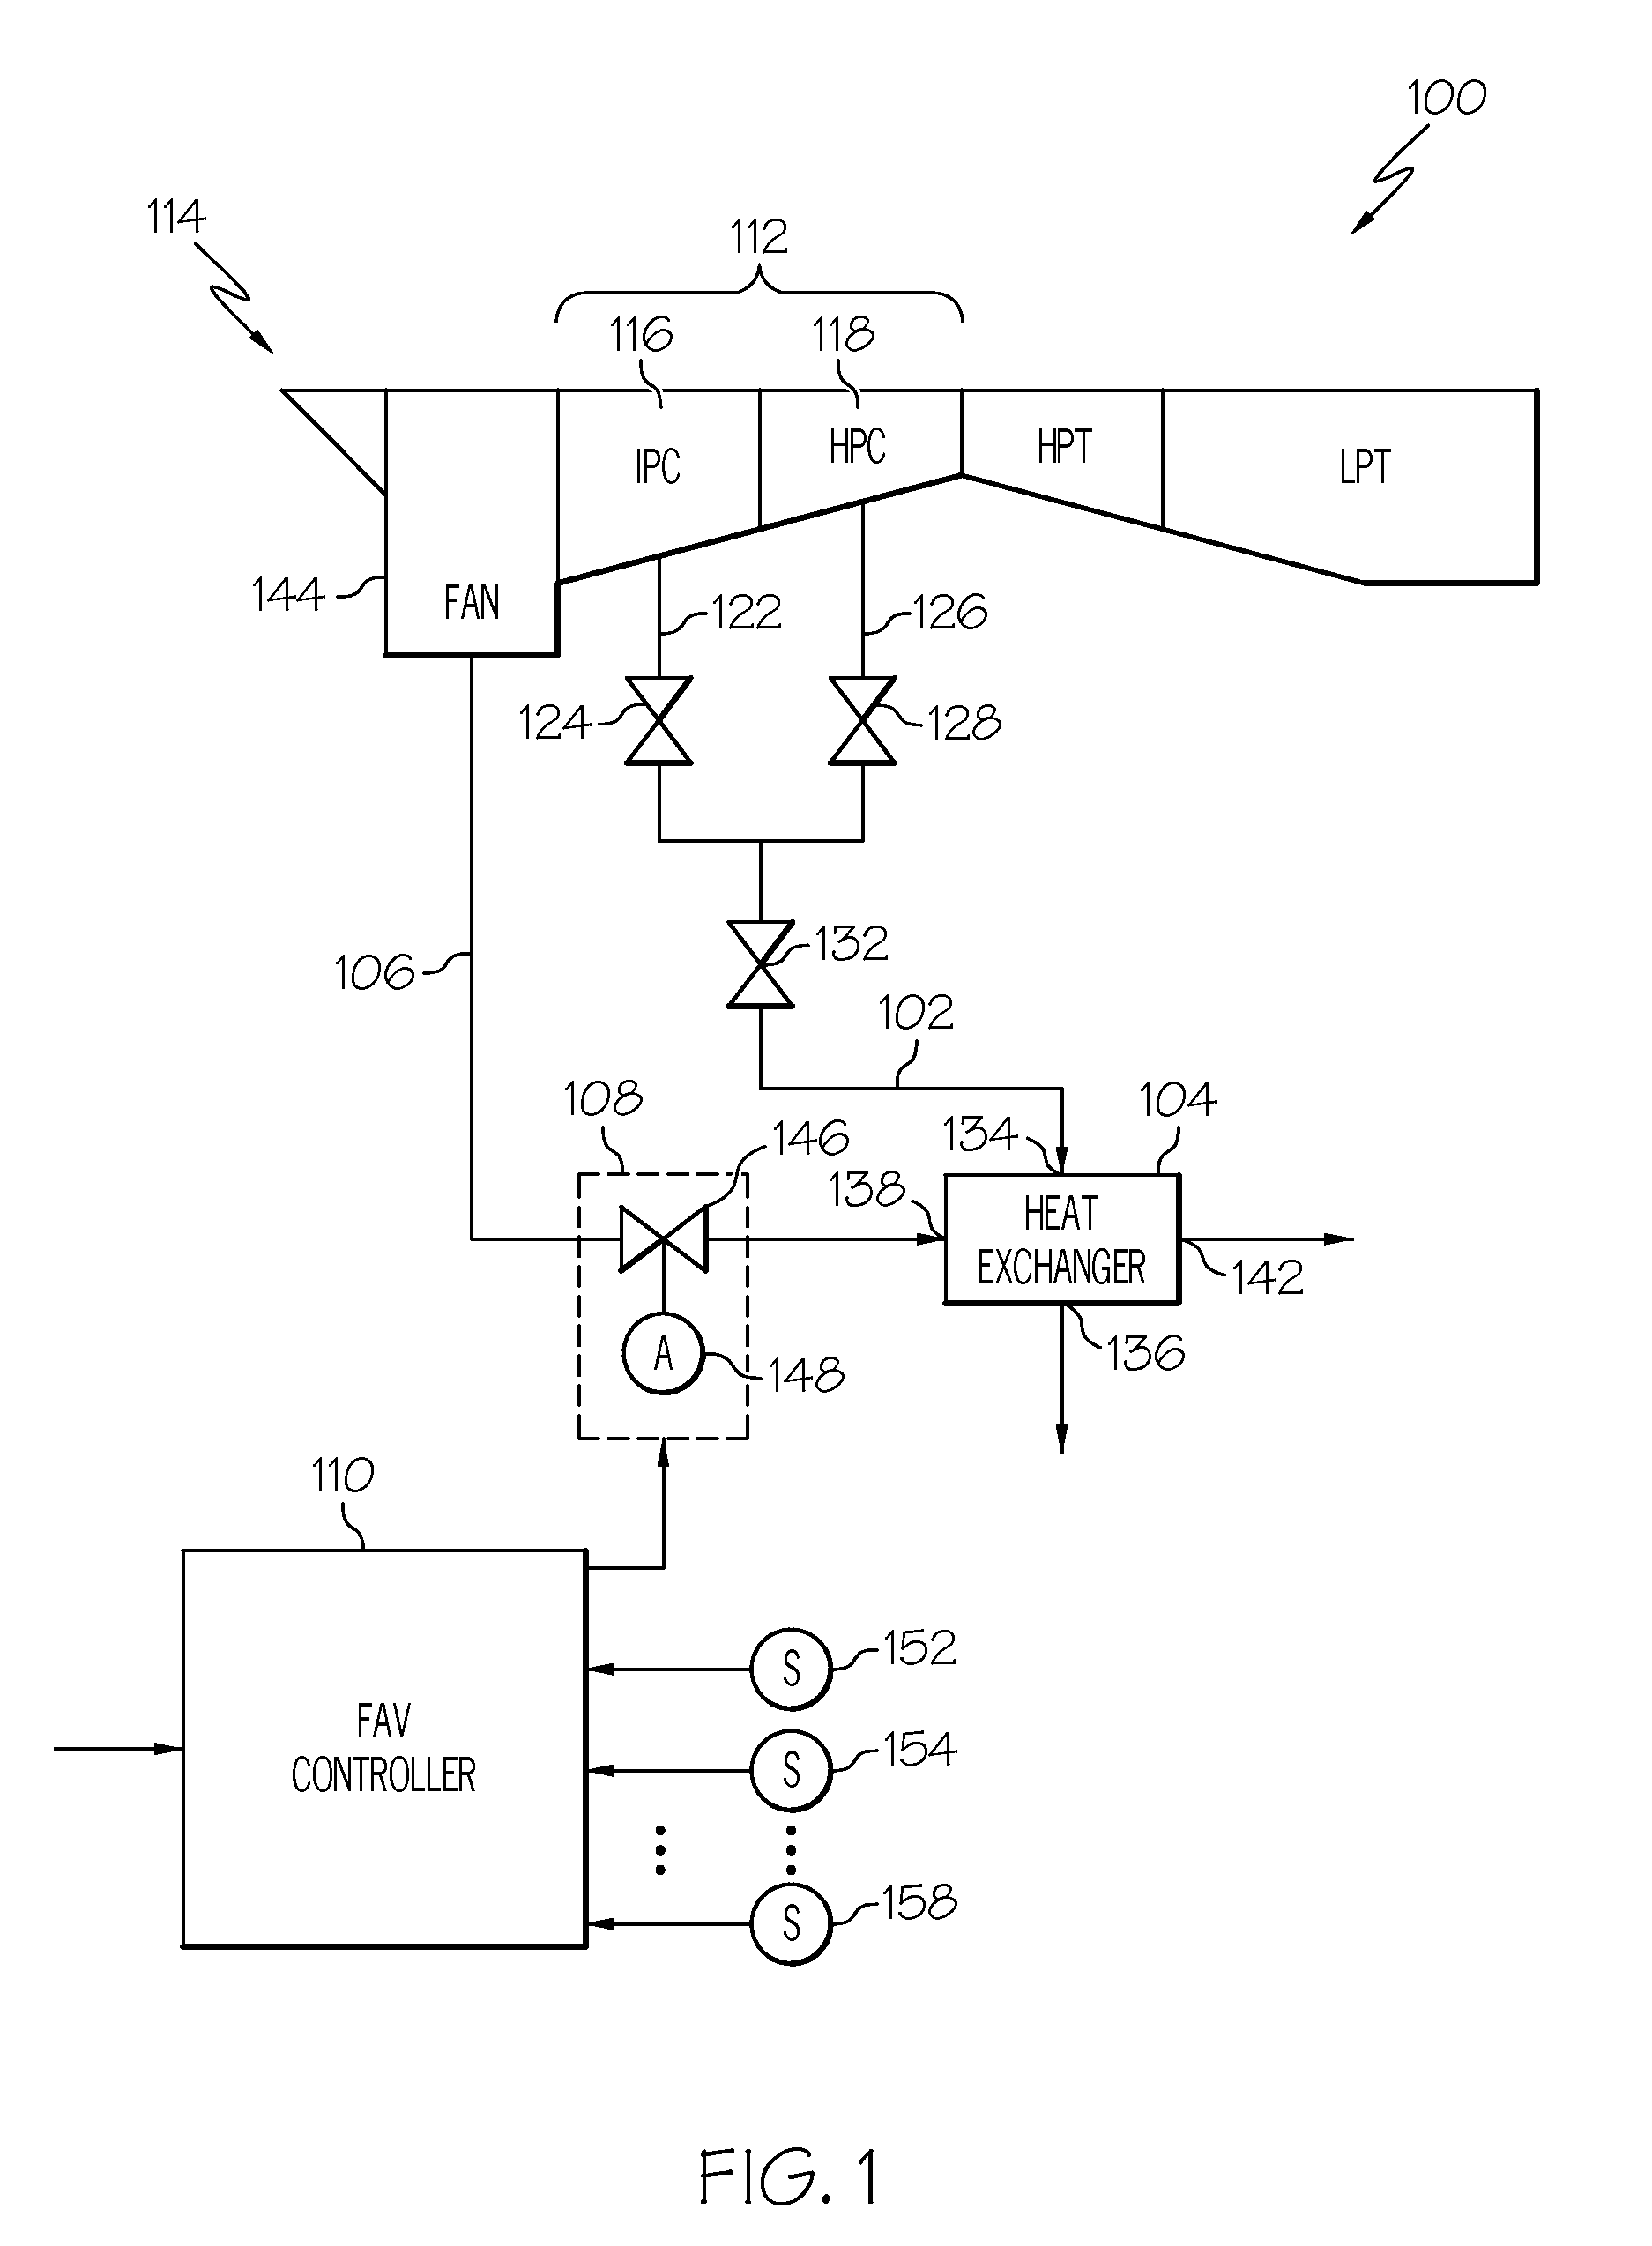 Linear quadratic regulator control for bleed air system fan air valve